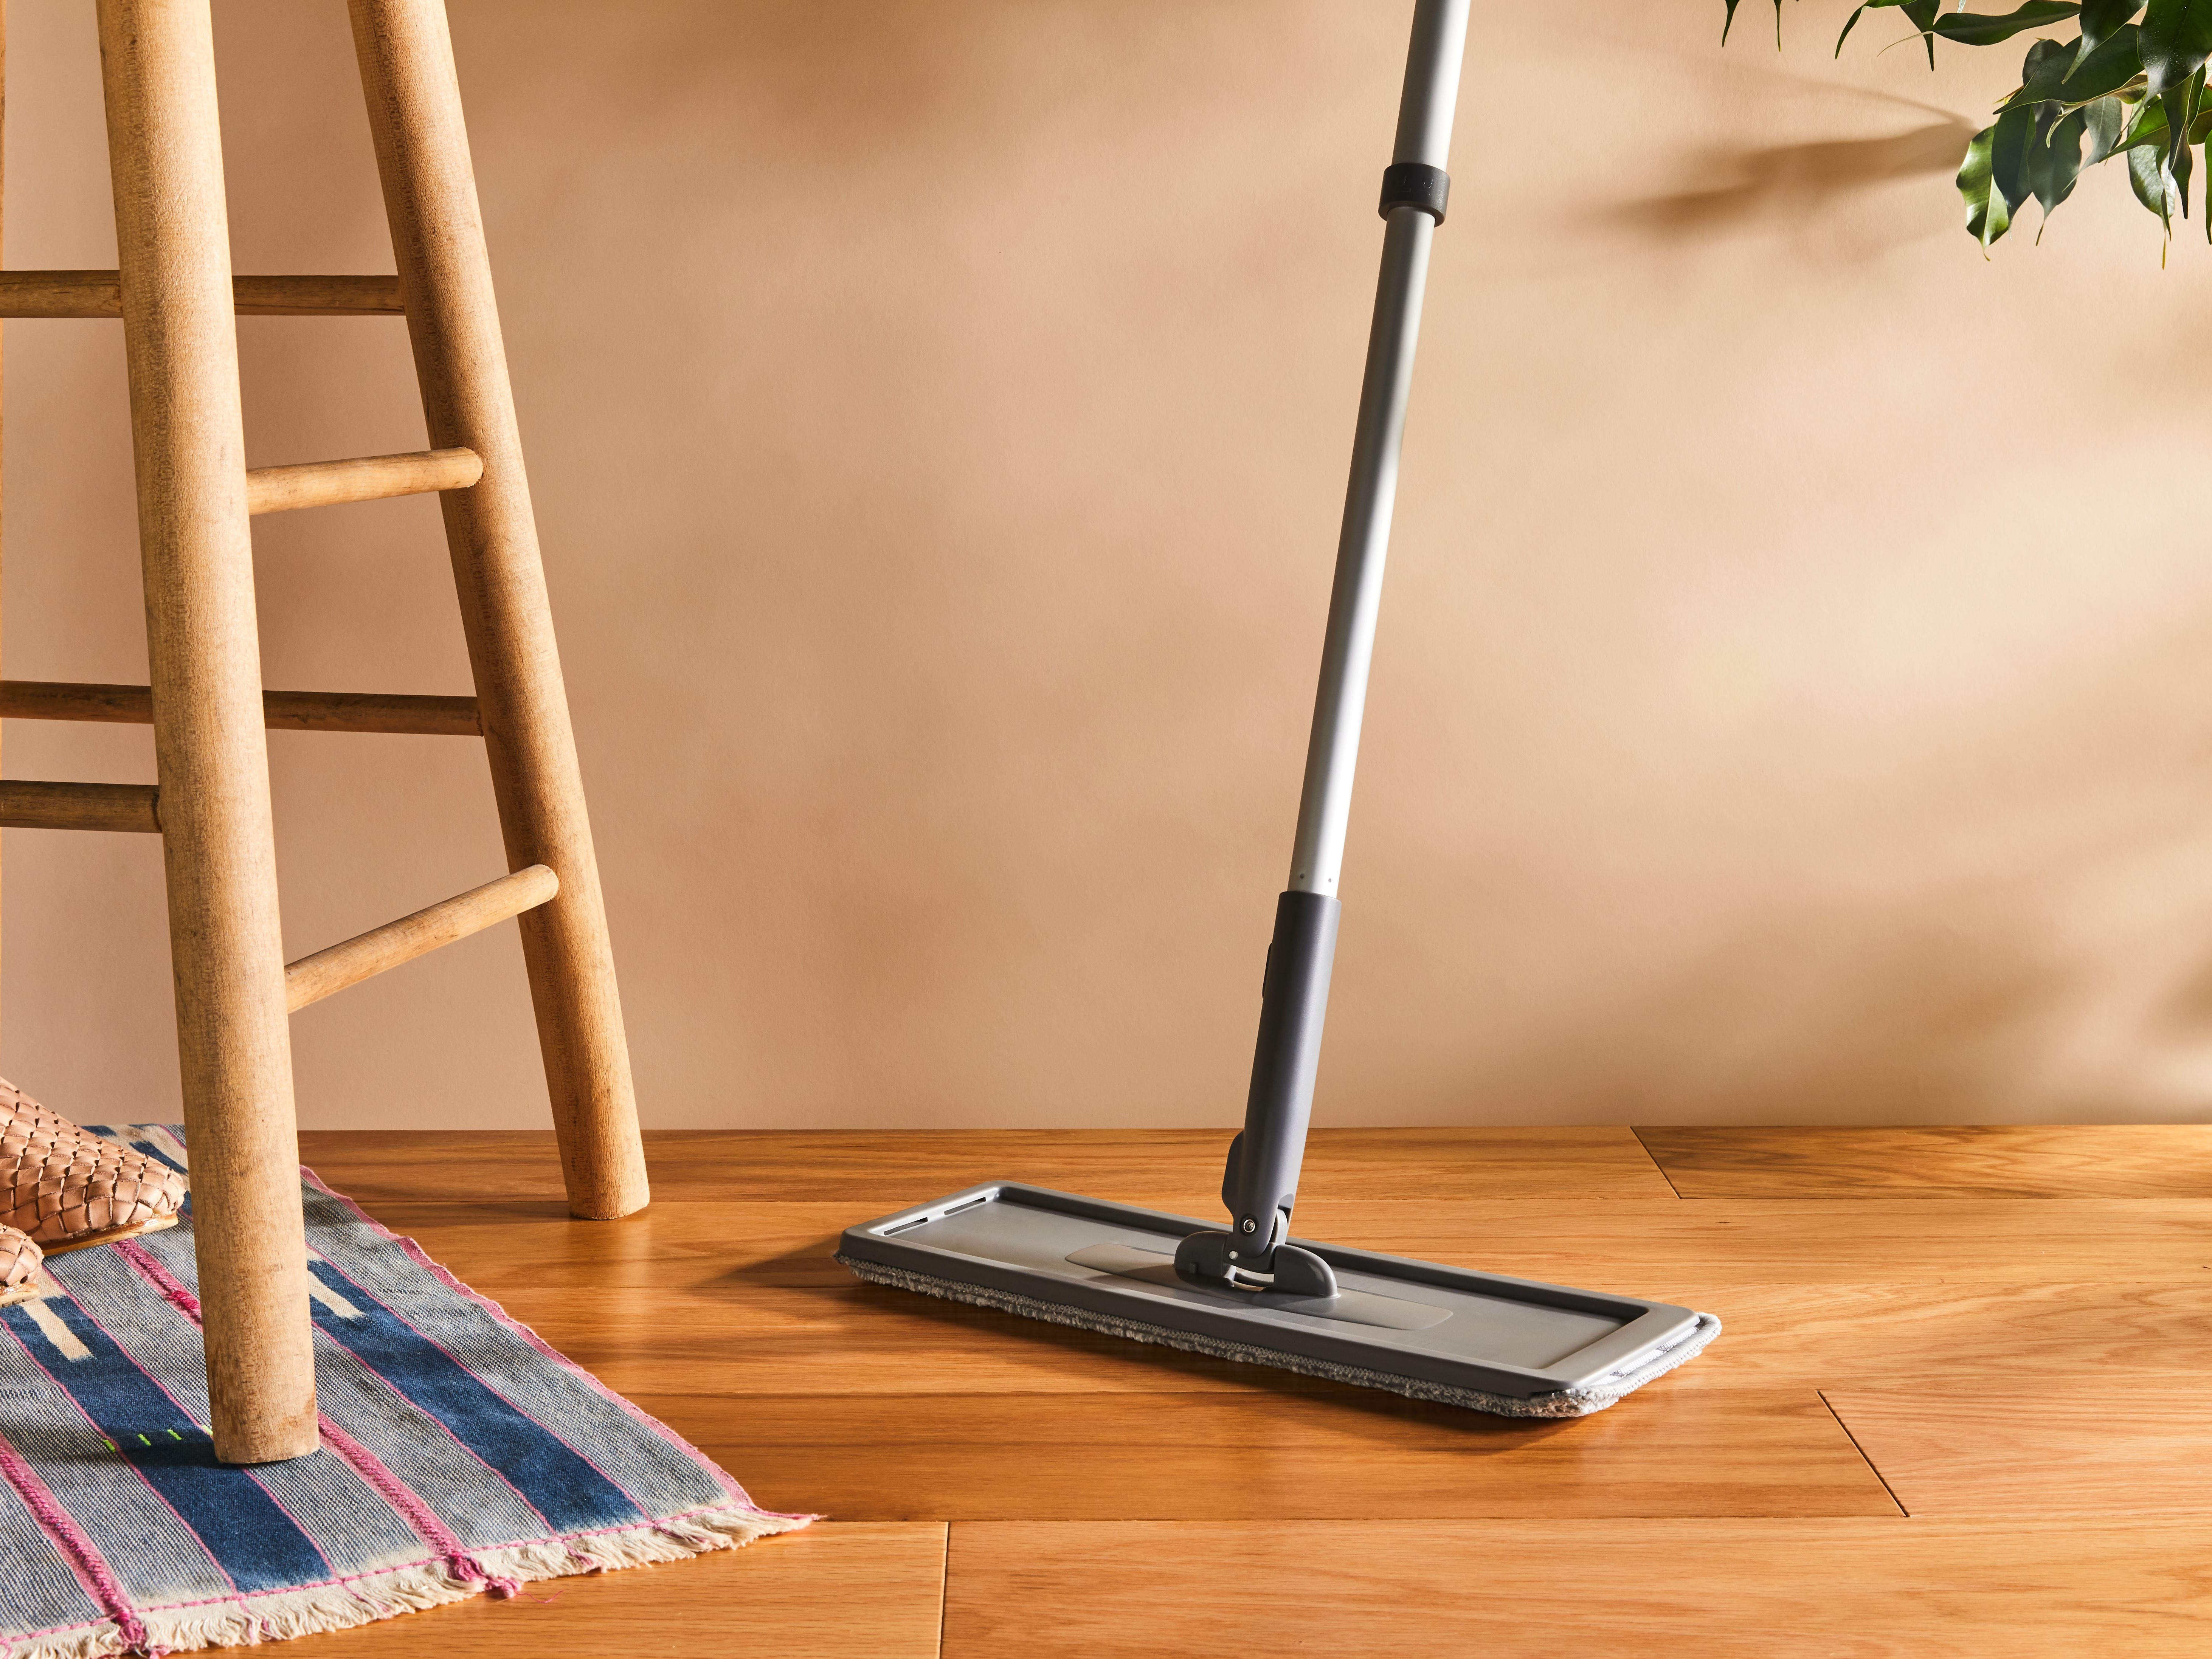 Image of dust mop on wooden laminate flooring